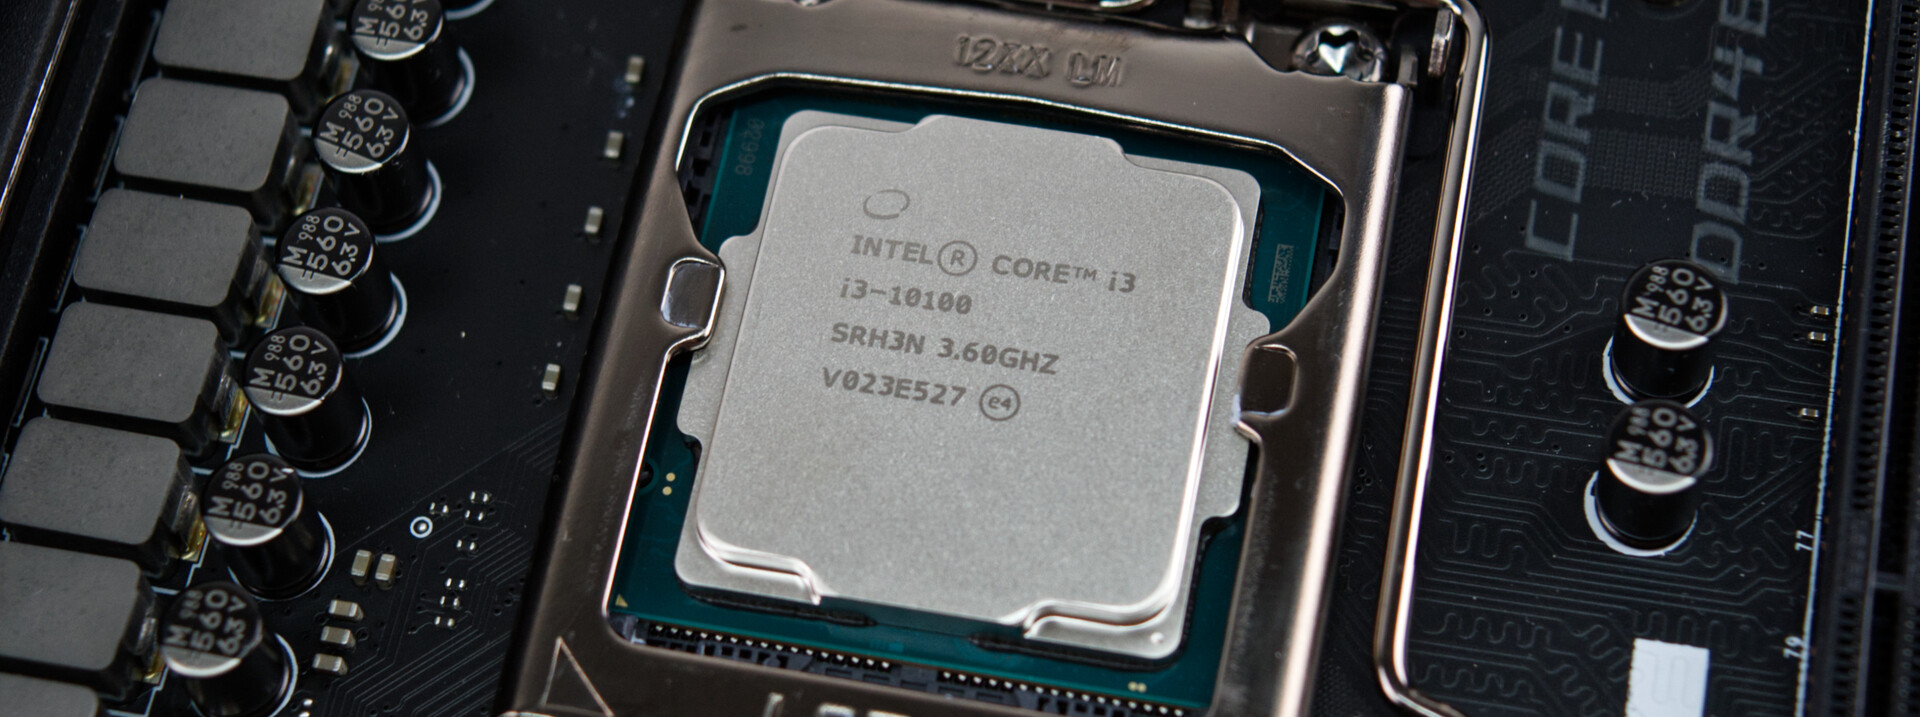 Intel Core i3-10100 - Core i3 10th Gen Comet Lake Quad-Core 3.6